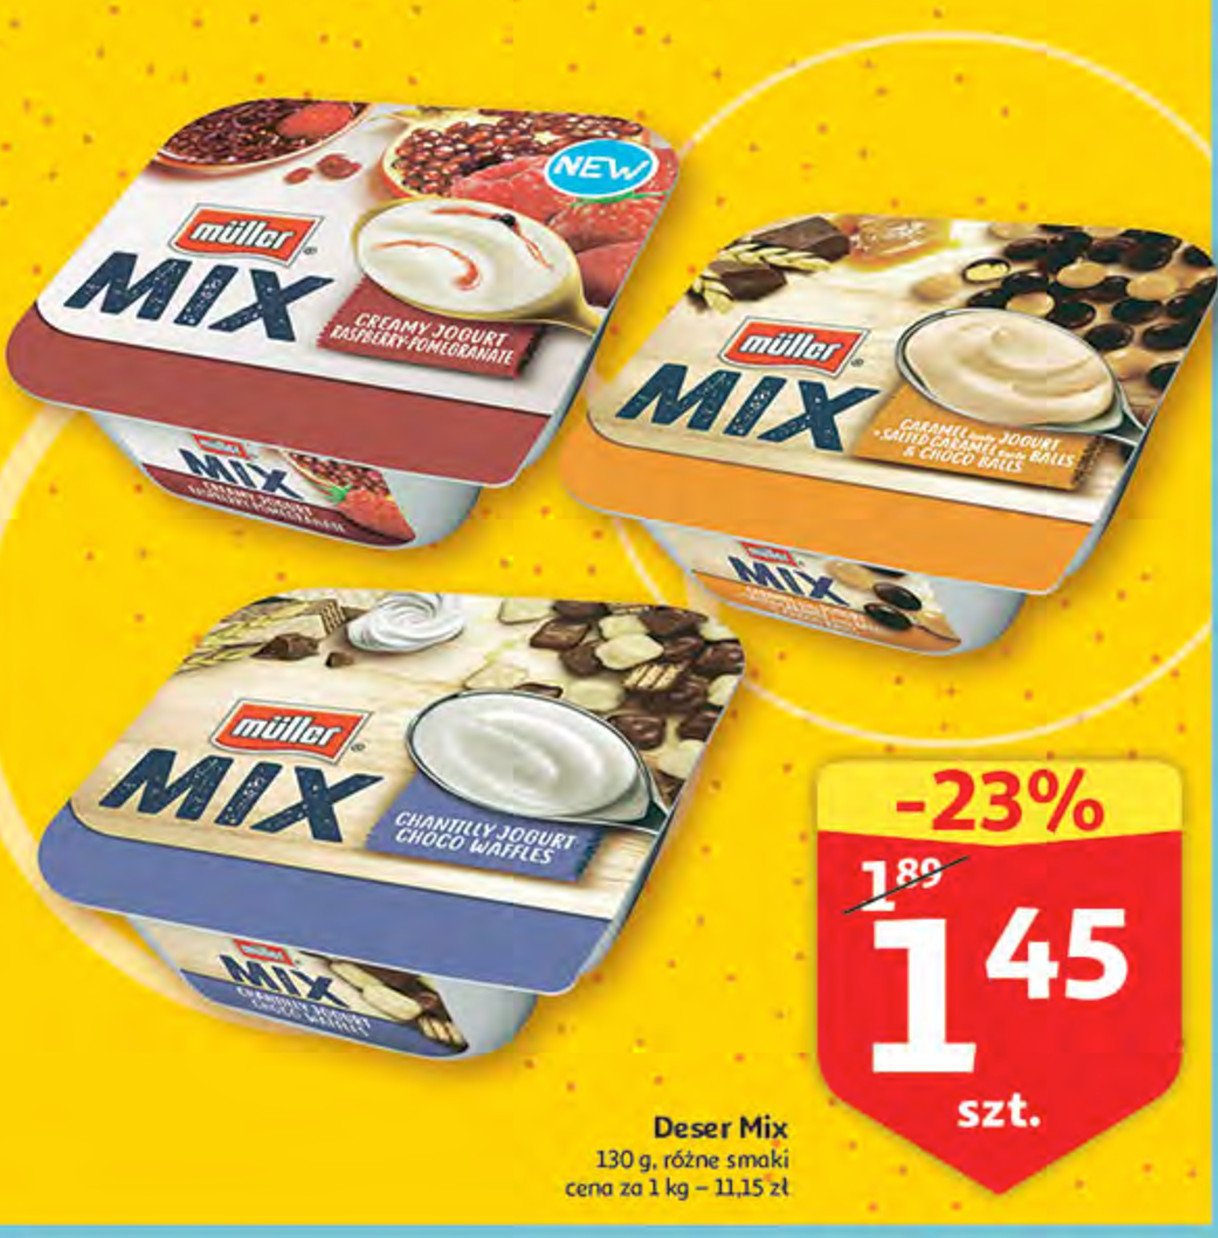 Jogurt caramel & choco balls Muller mix promocja